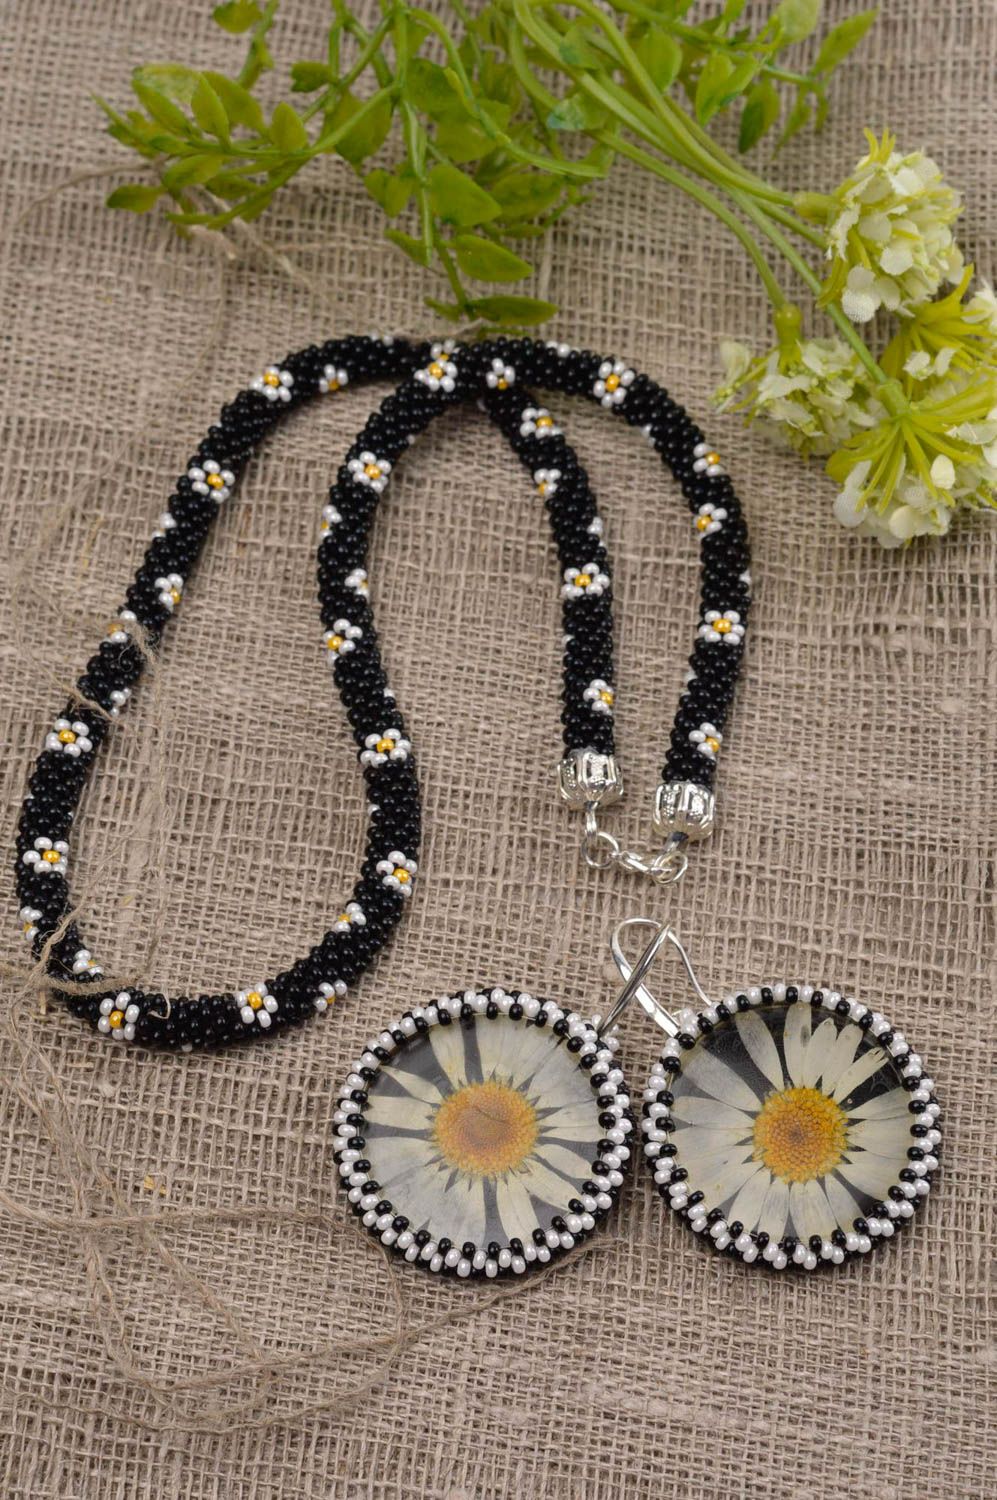 Handmade earrings designer jewelry gift ideas unusual beaded cord gift for women photo 1